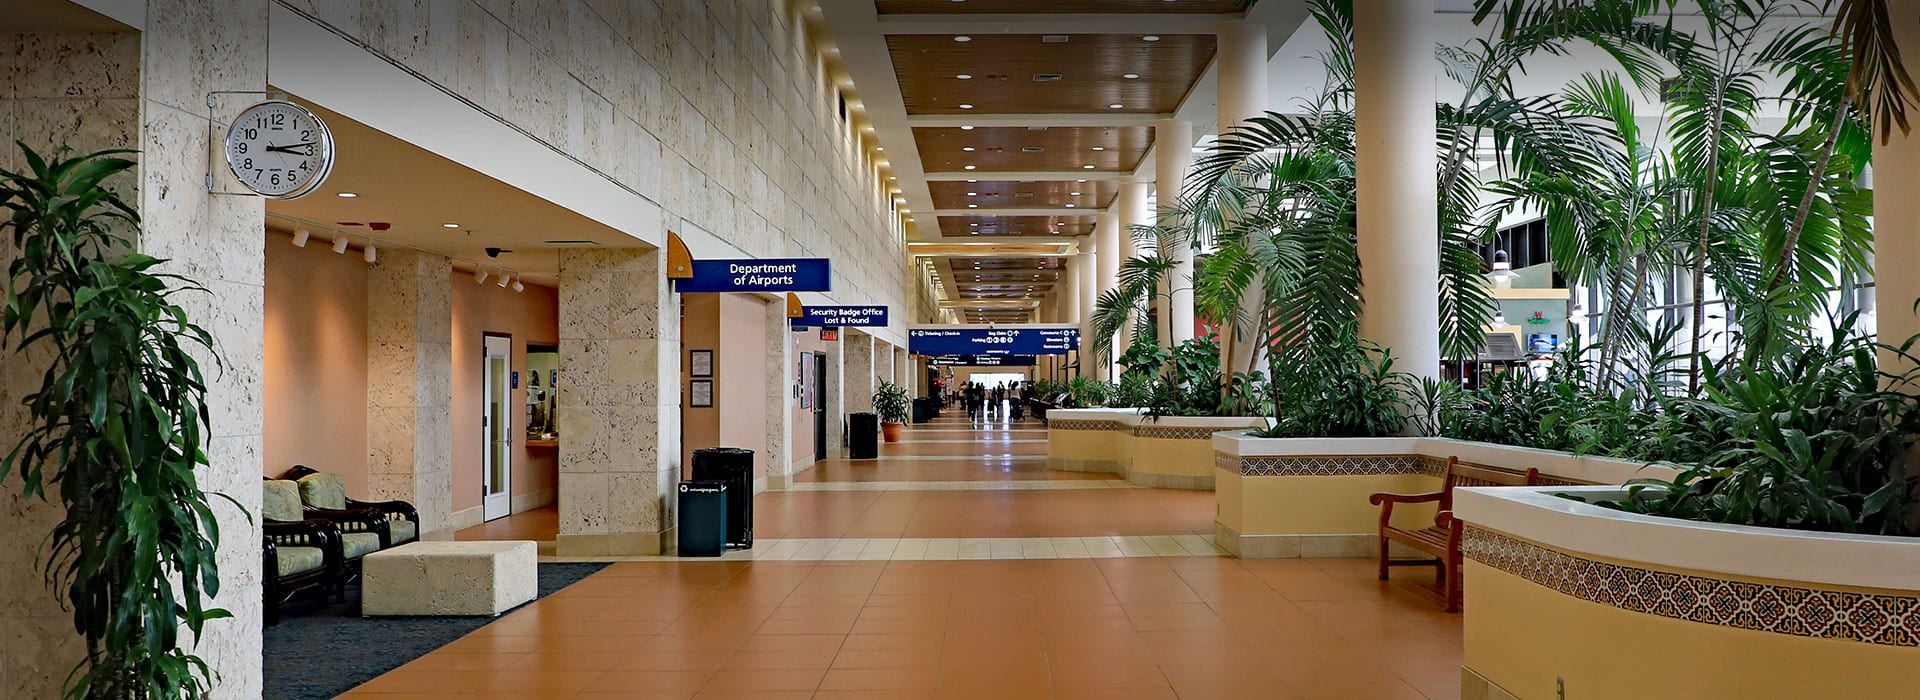 Palm Beach International Airport interior hallway